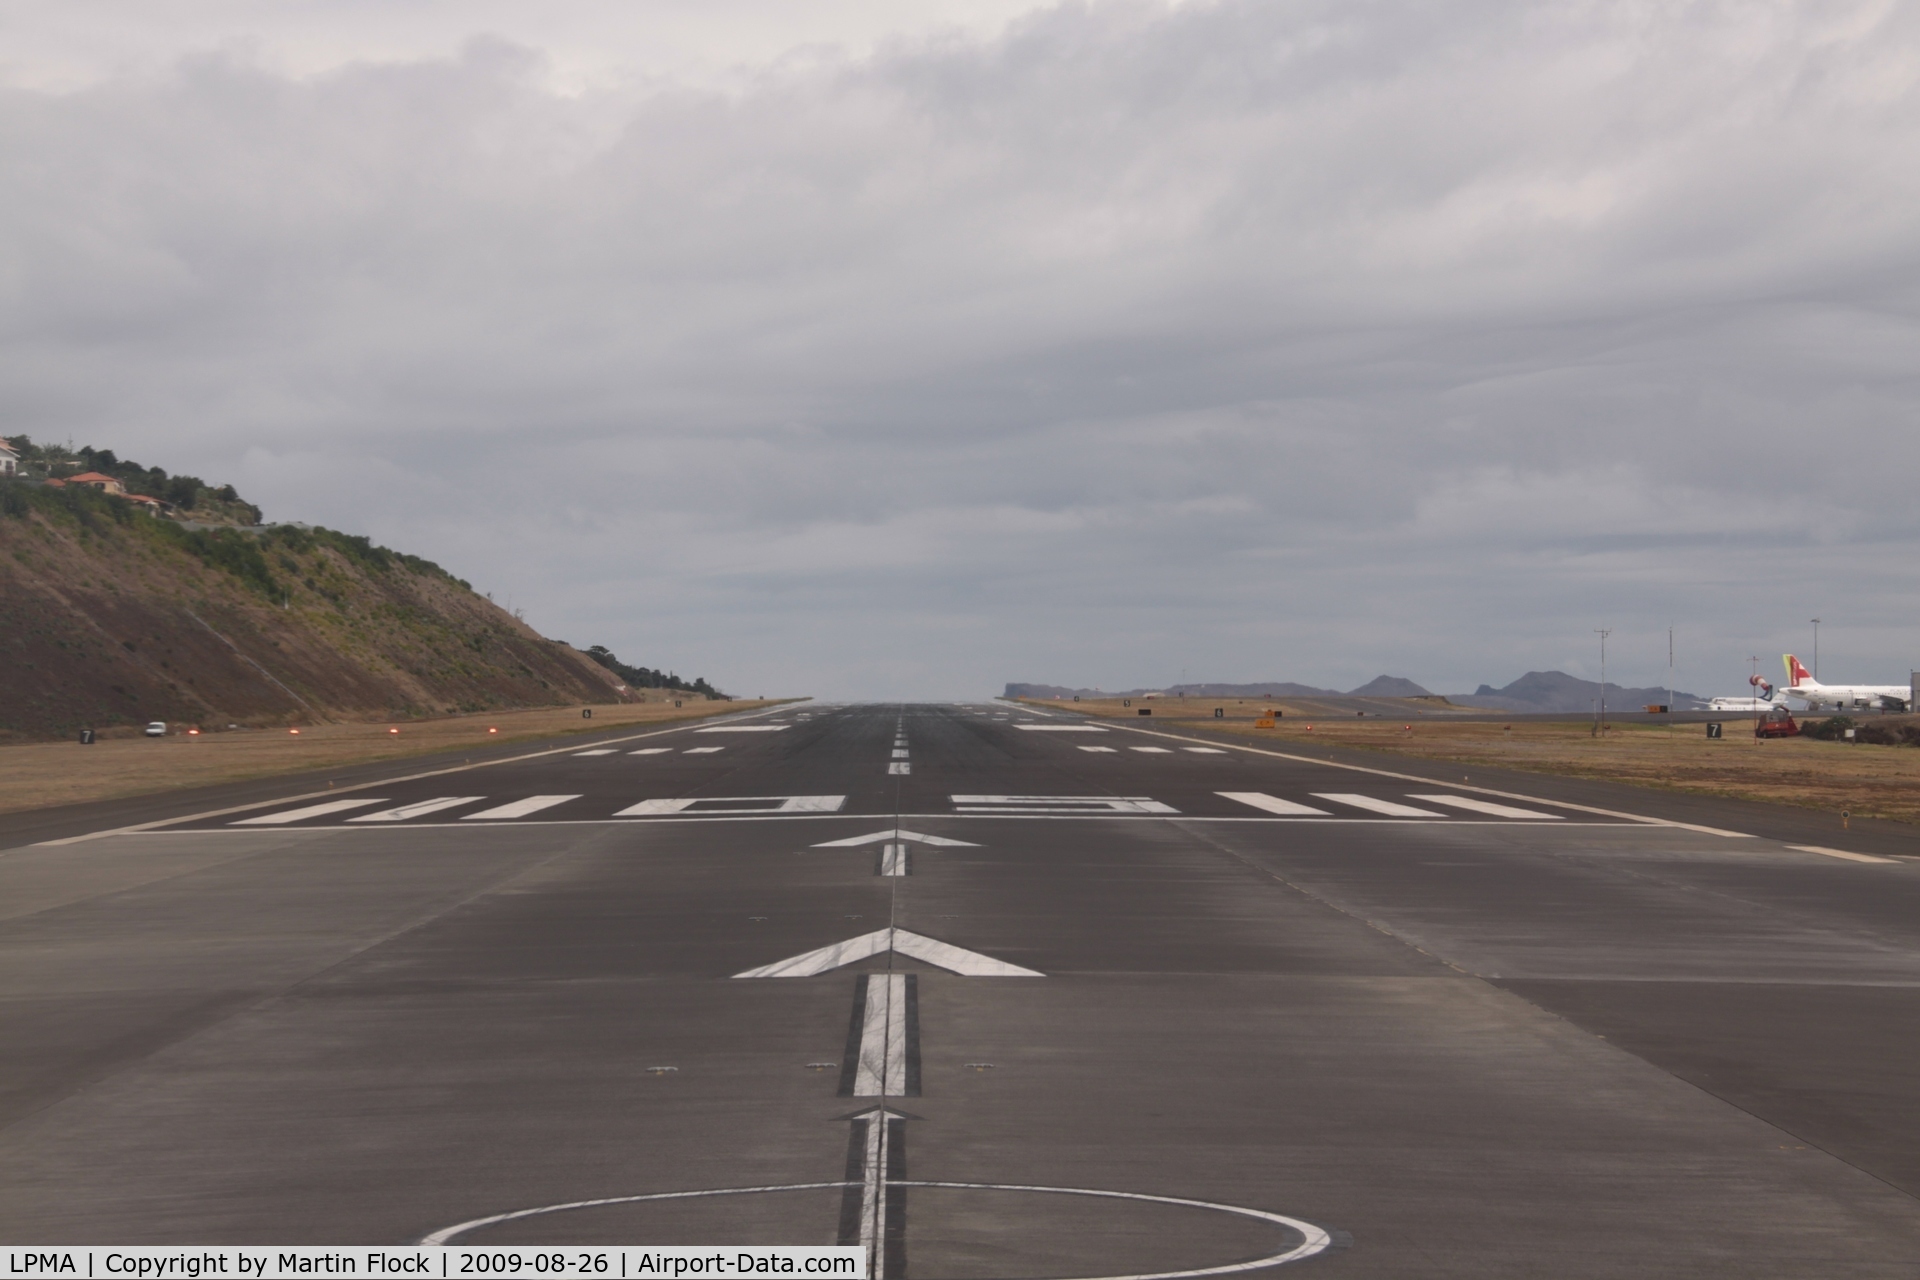 Madeira Airport (Funchal Airport), Funchal, Madeira Island Portugal (LPMA) - Runway of LPMA